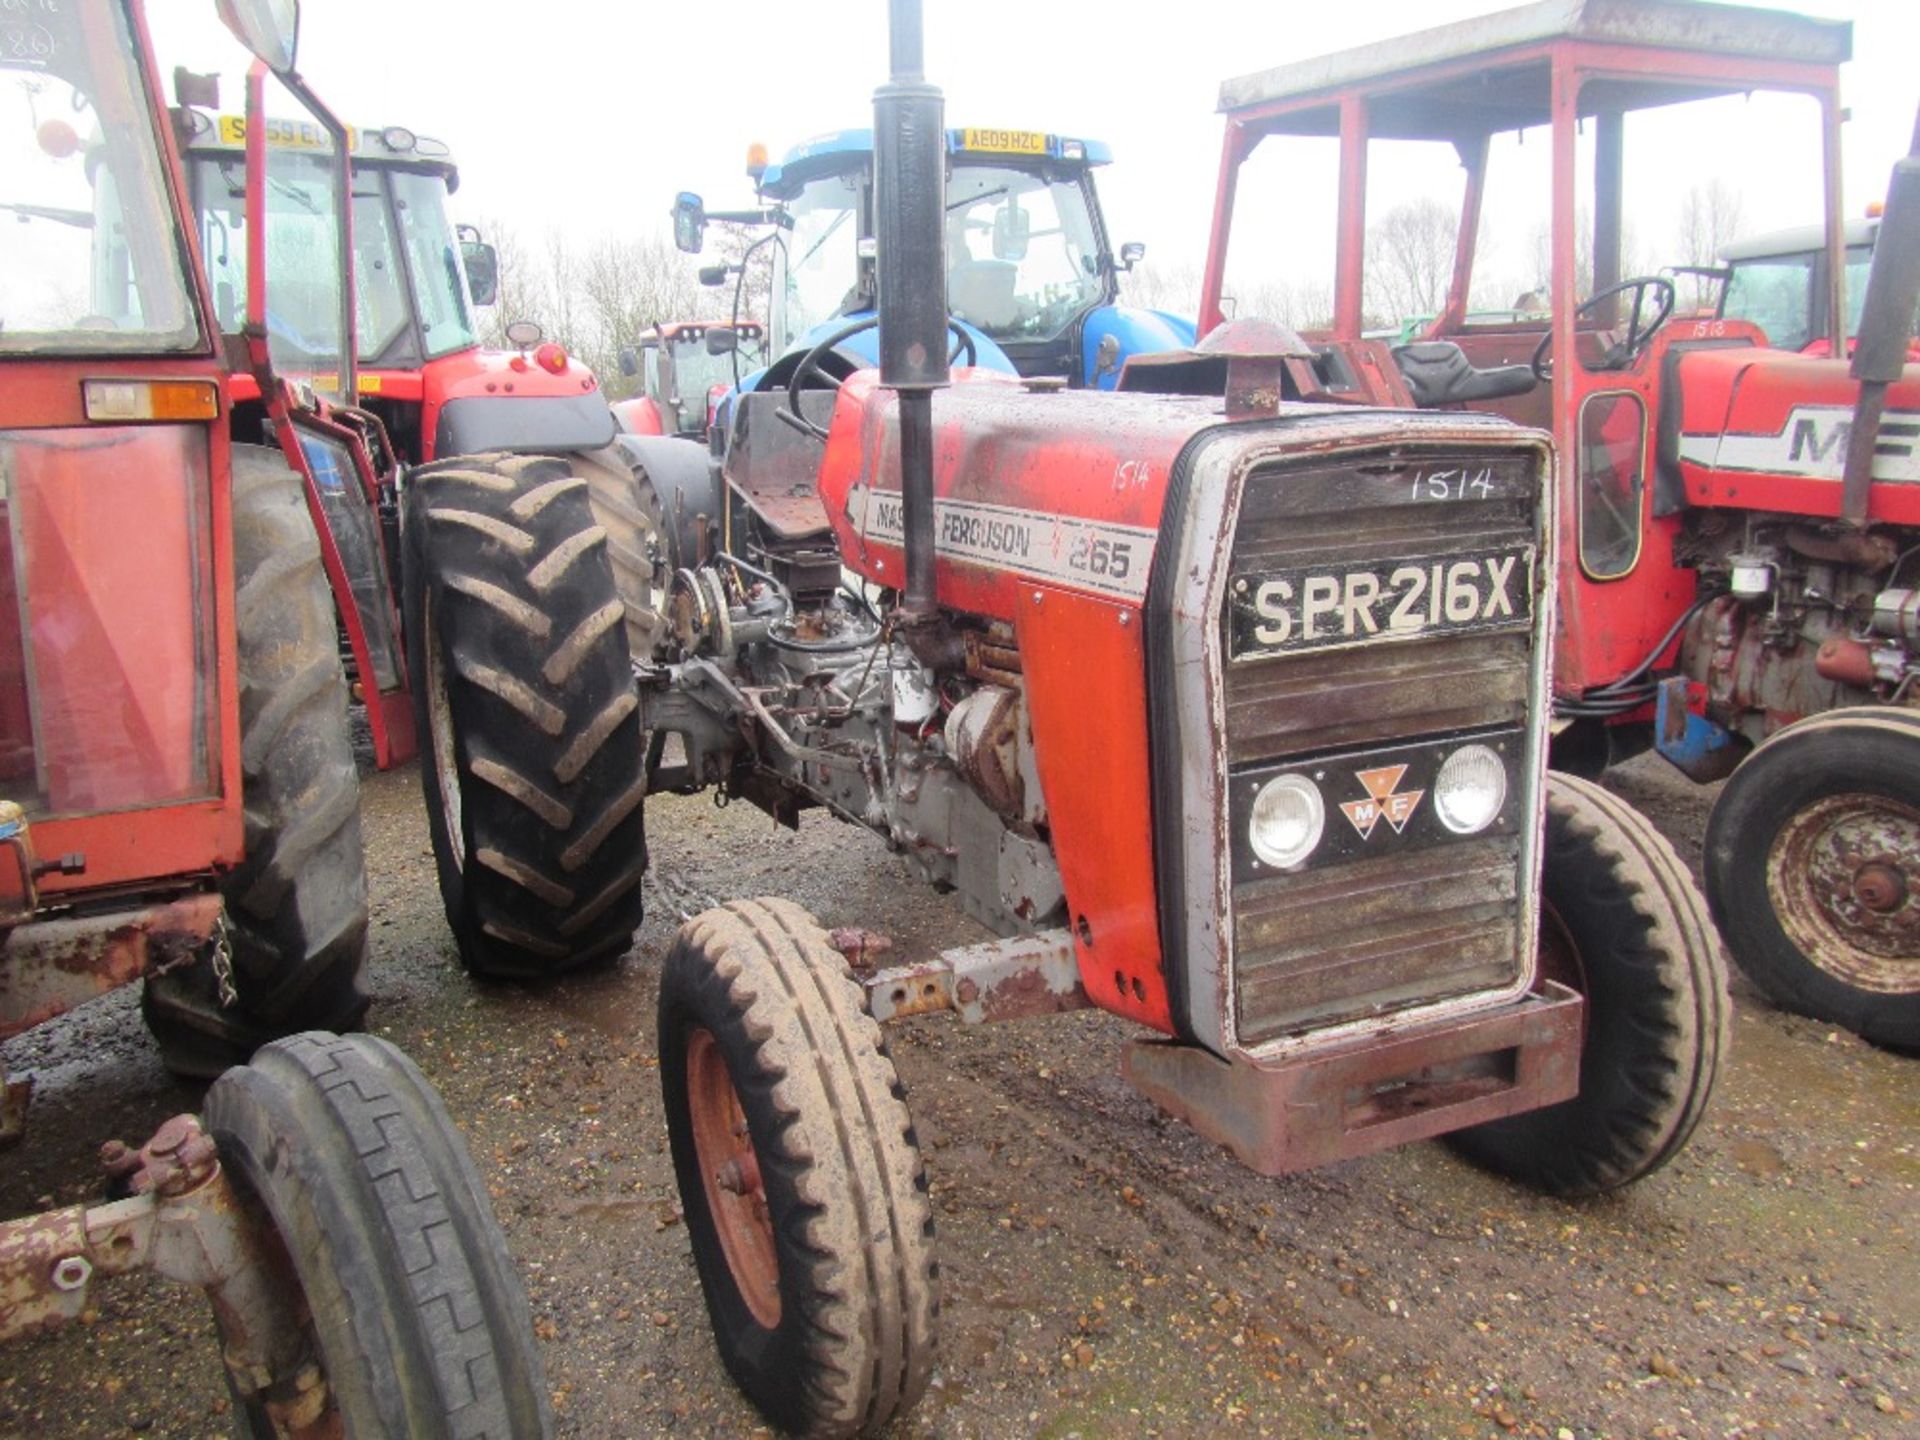 Massey Ferguson 265 Tractor c/w Std Gearbox Reg No SPR 216X Ser No 186518 - Image 3 of 6